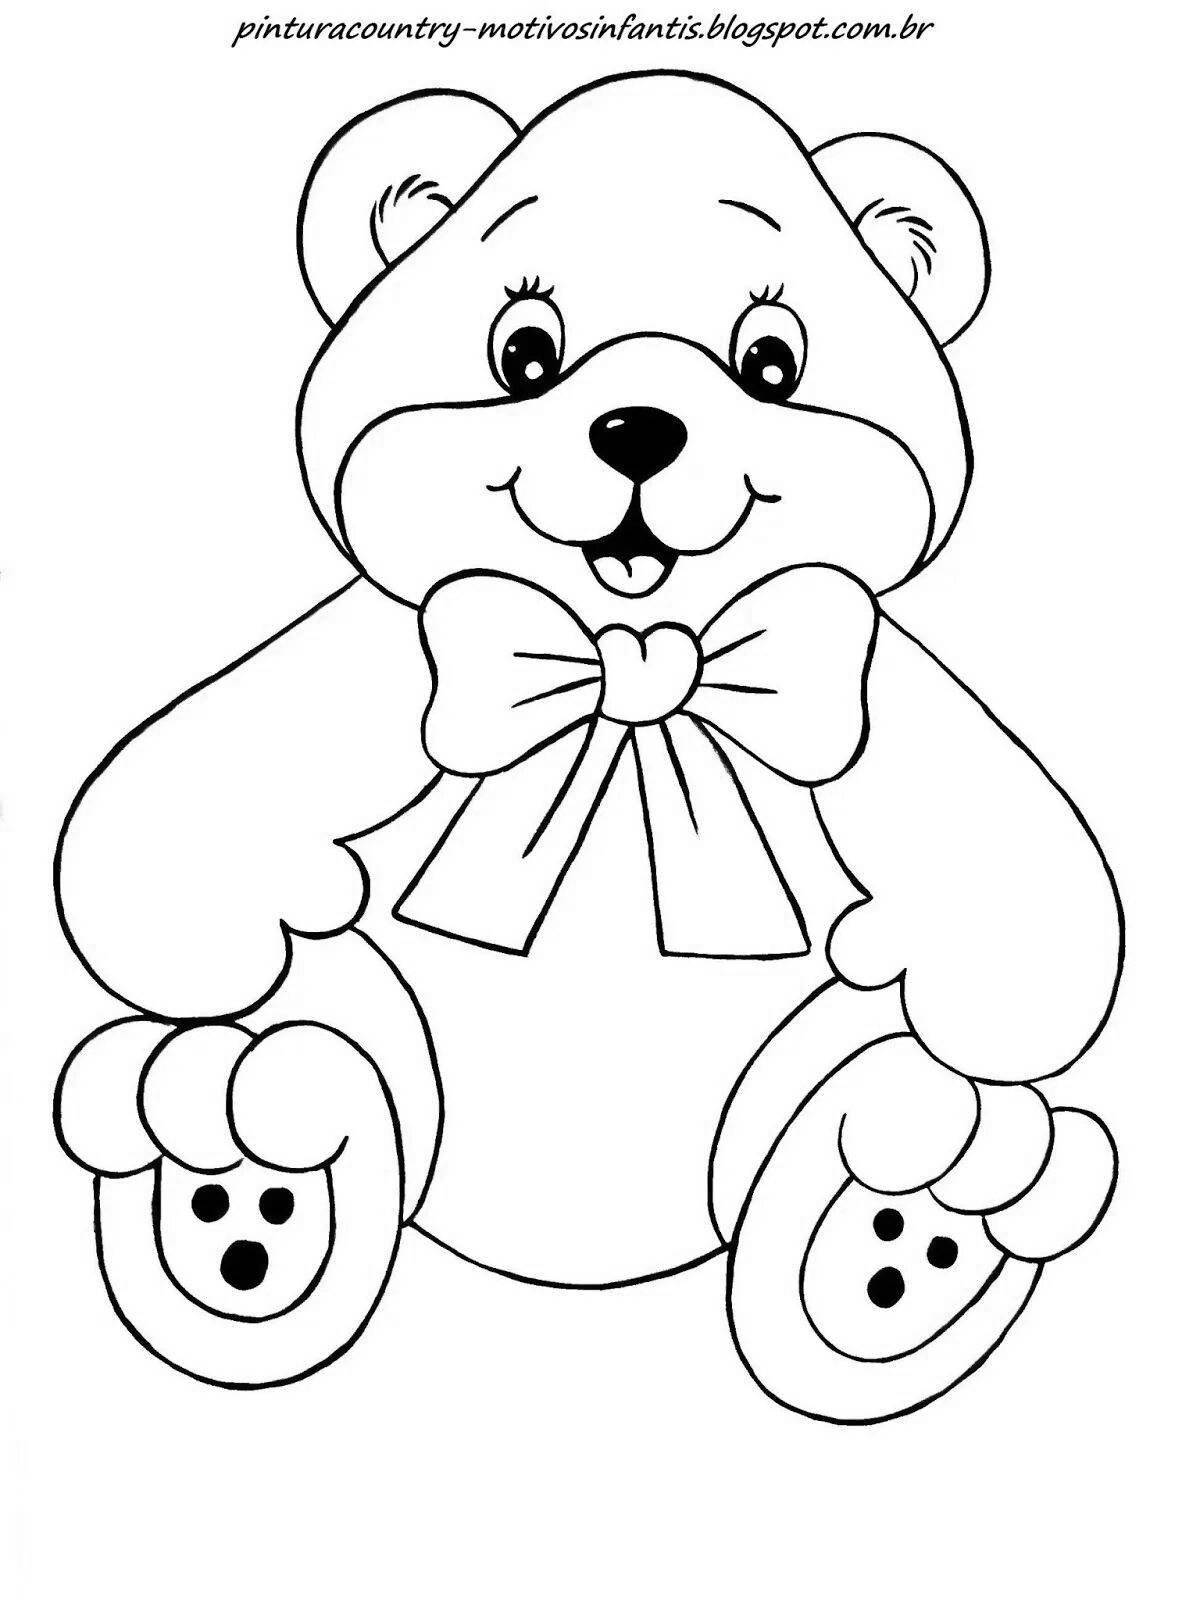 Coloring precious teddy bear in baby pants